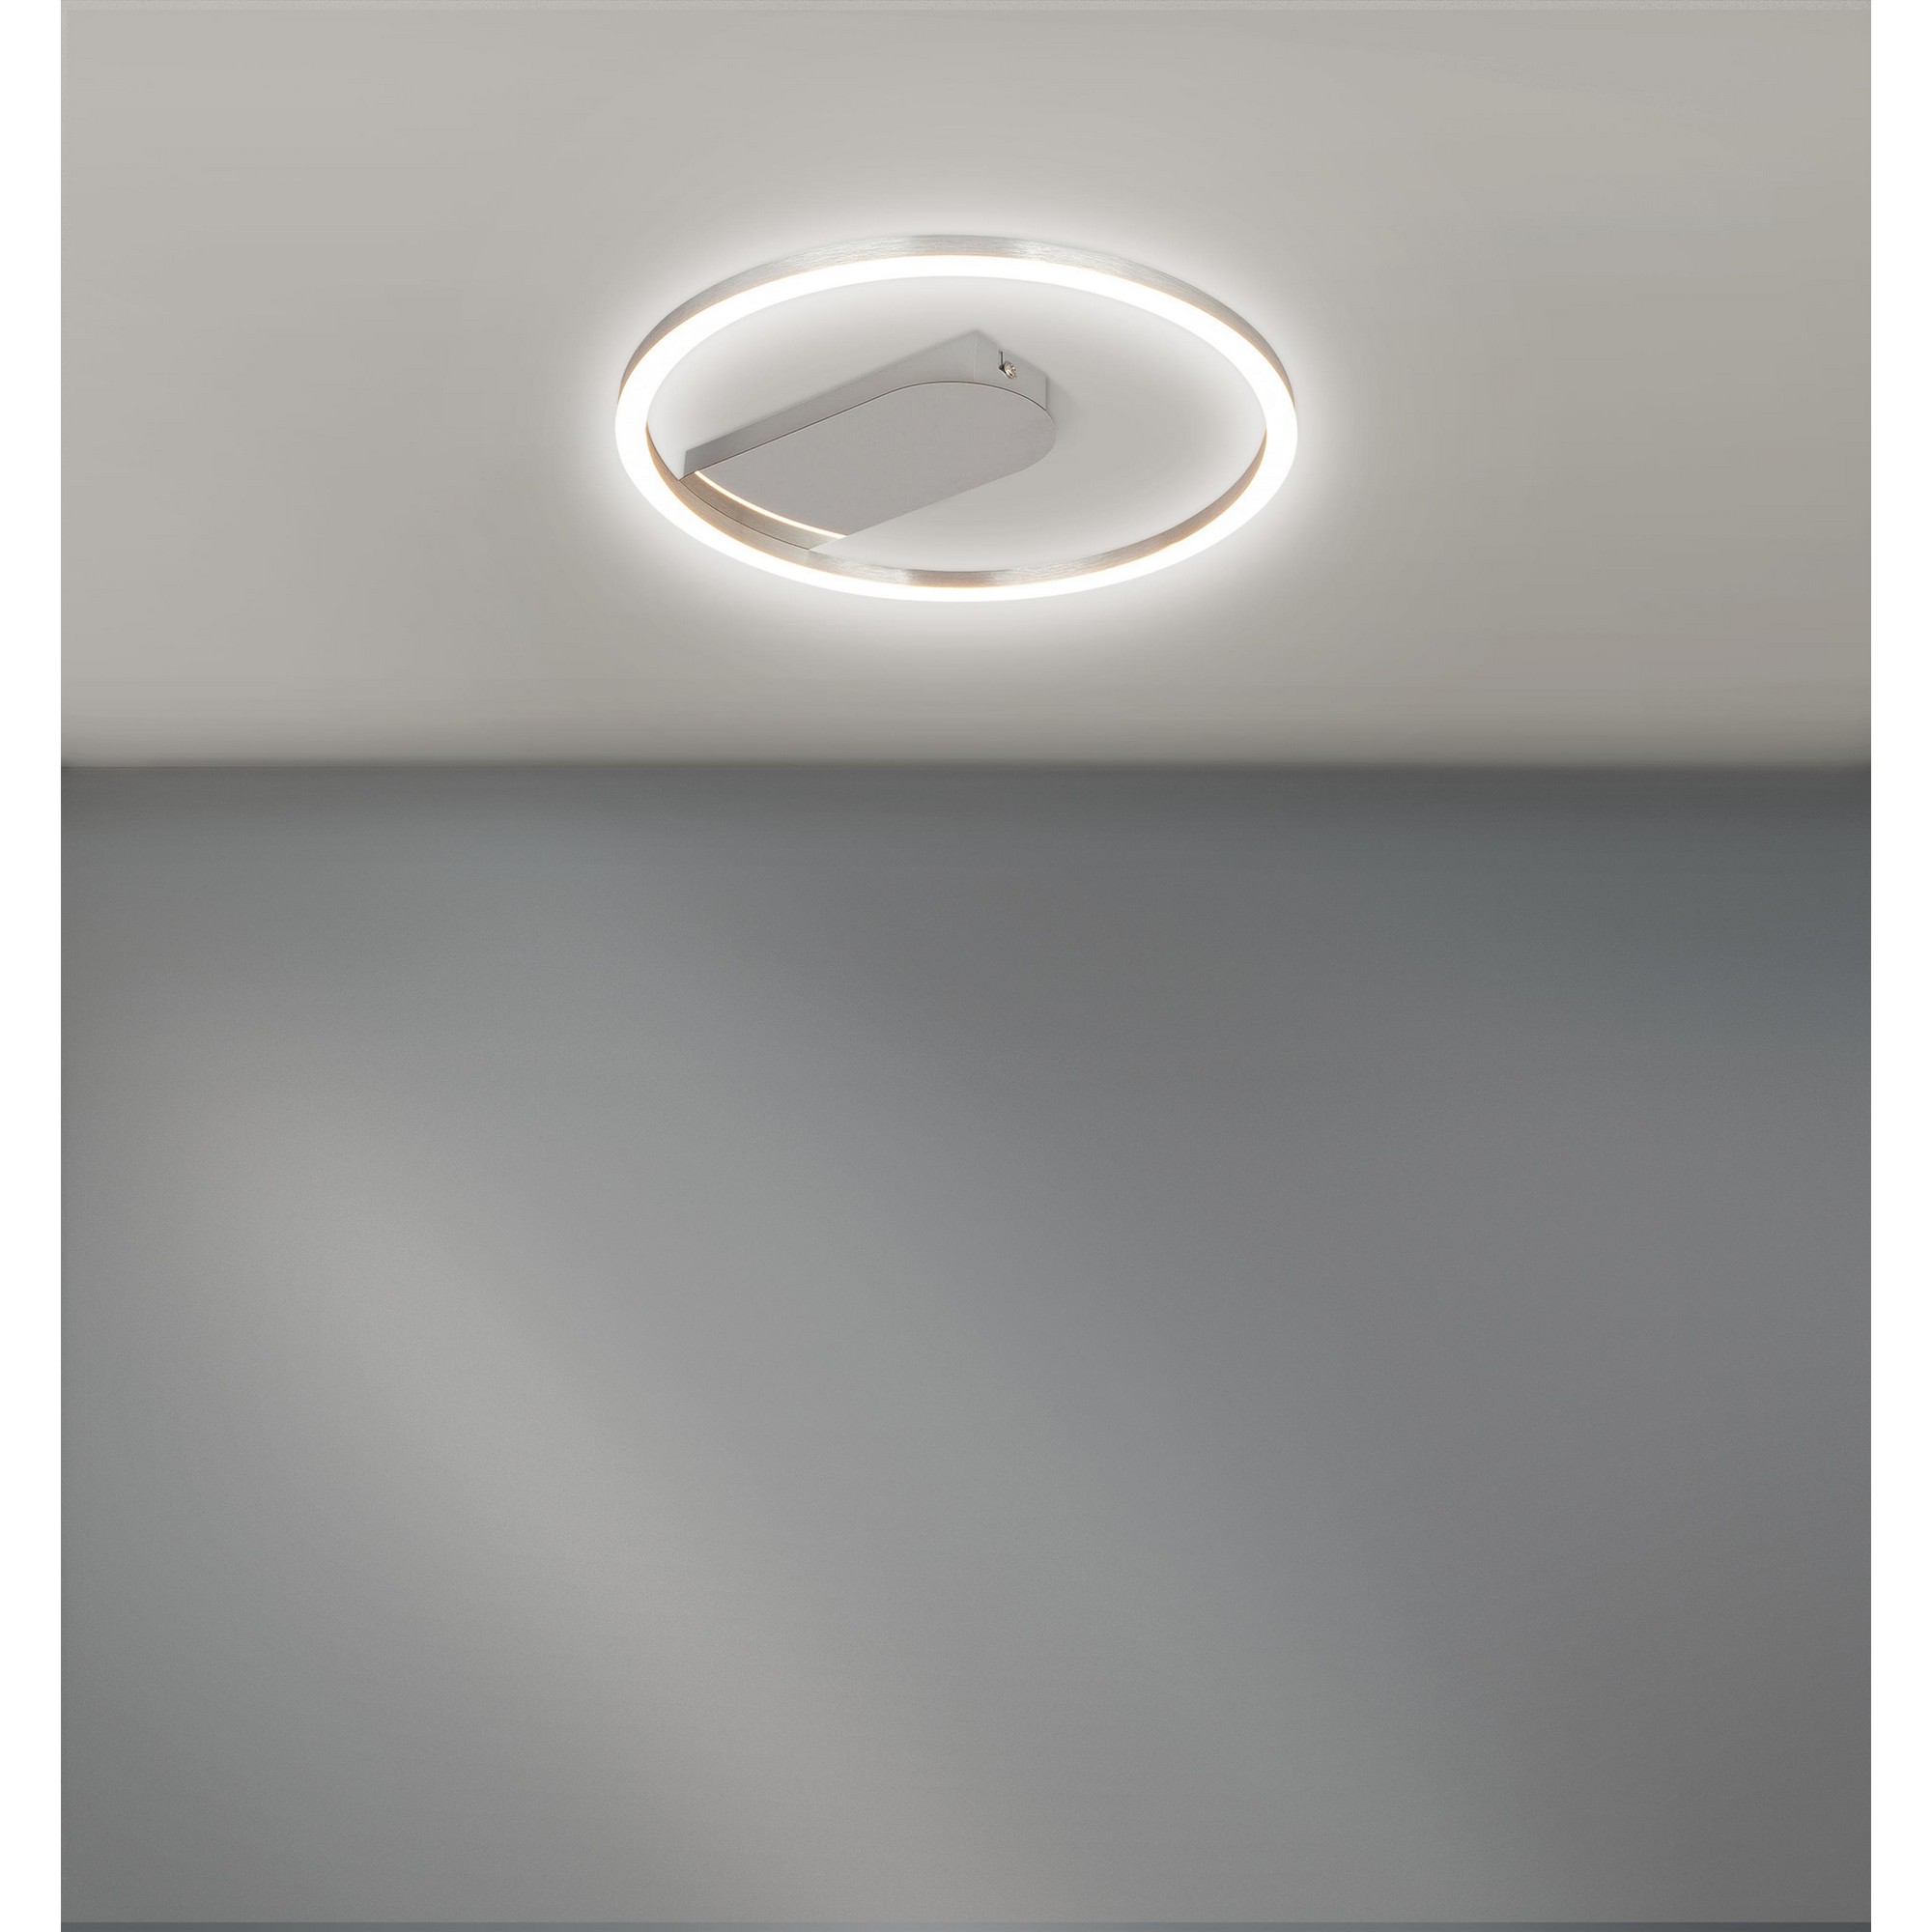 LED-Deckenleuchte weiß/silber 400 lm, Ø 30 cm + product picture